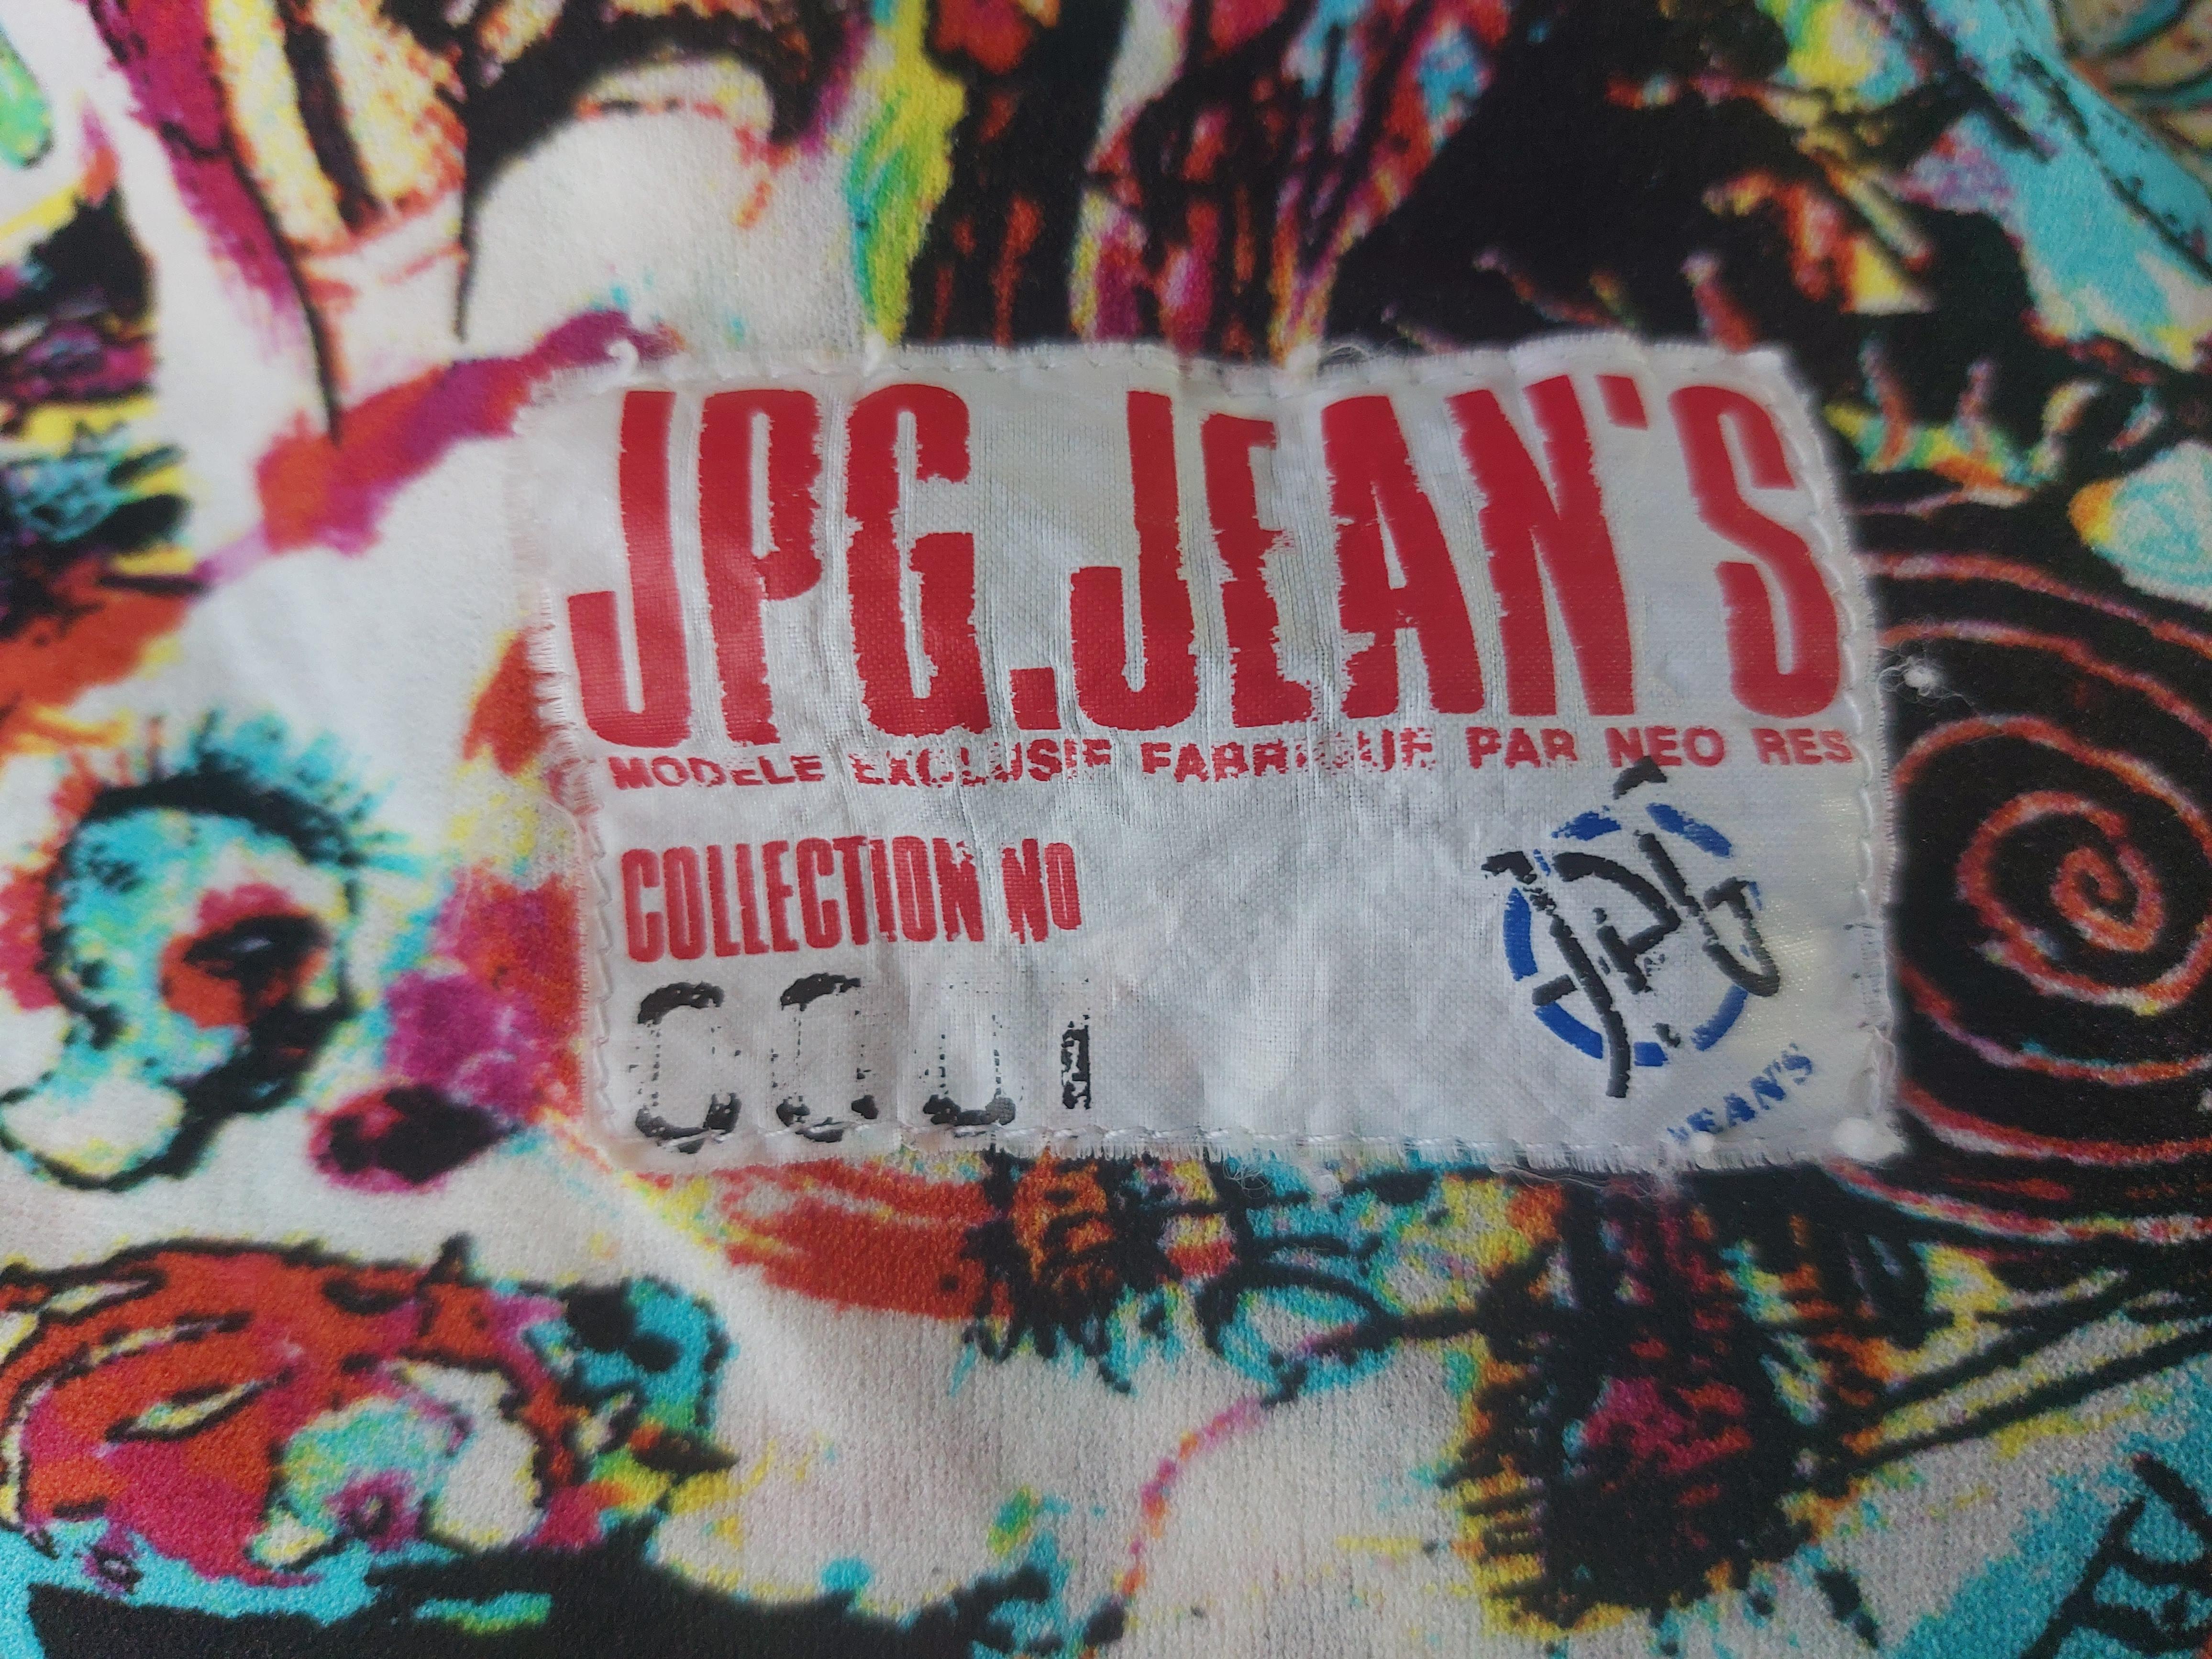 Jean Paul Gaultier JPG Basquiat Opaque mesh sketch graffiti comic street art vintage 90s Optical Butterfly Maxi Long Tattoo Dress Robe

Long dress Jean Paul Gaultier Jeans 0001 collection, in extensible opaque mesh with graffiti patterns, sketch JPG